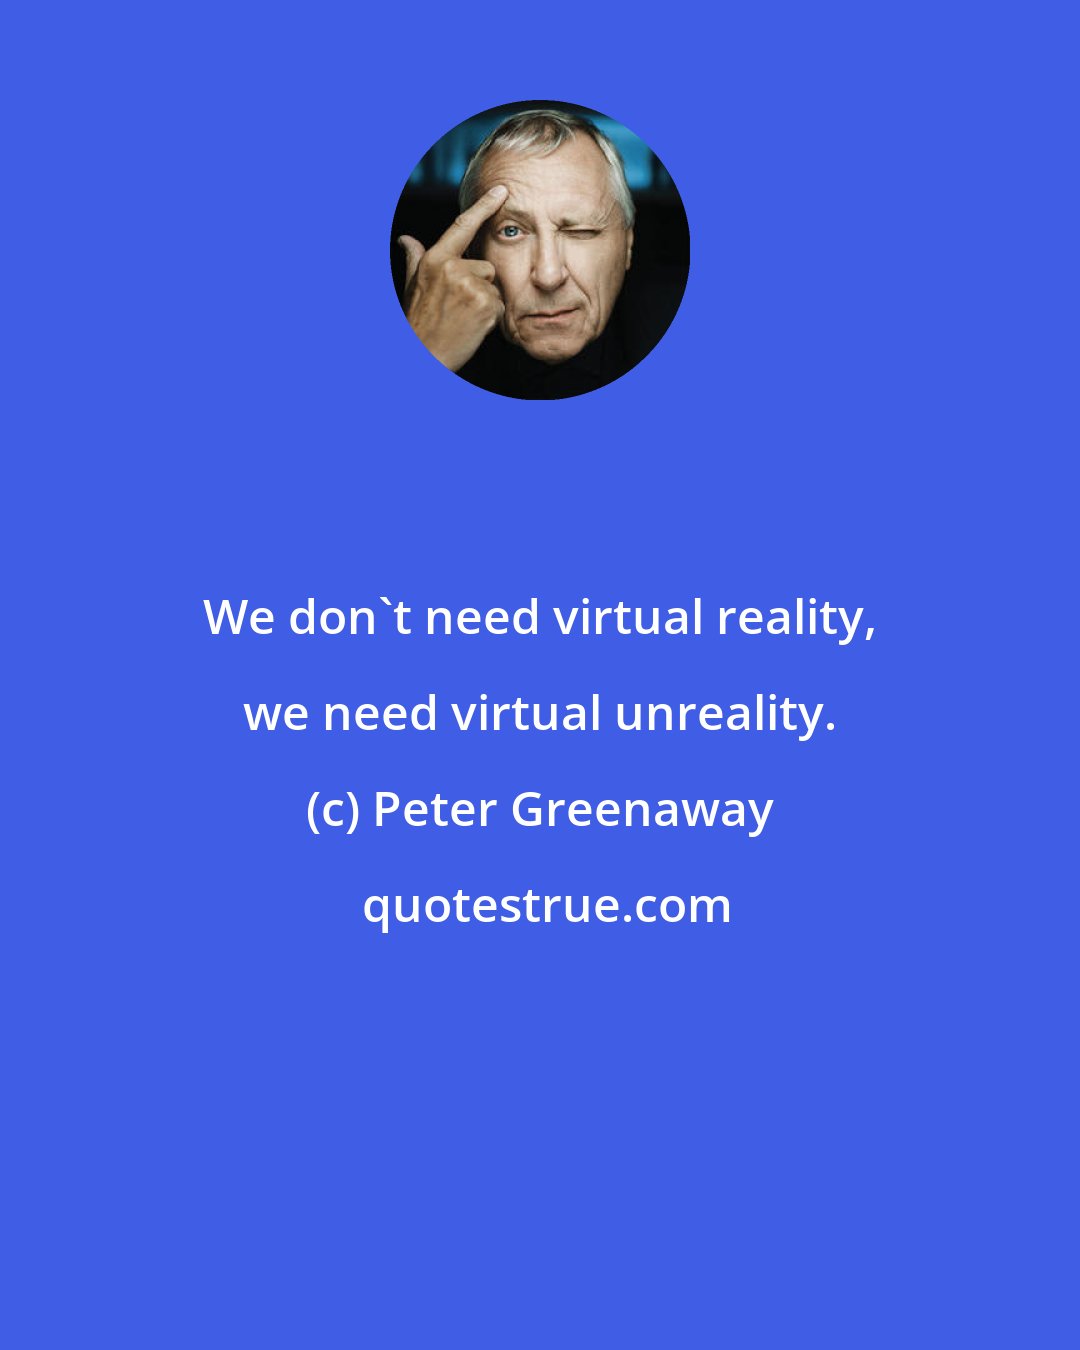 Peter Greenaway: We don't need virtual reality, we need virtual unreality.